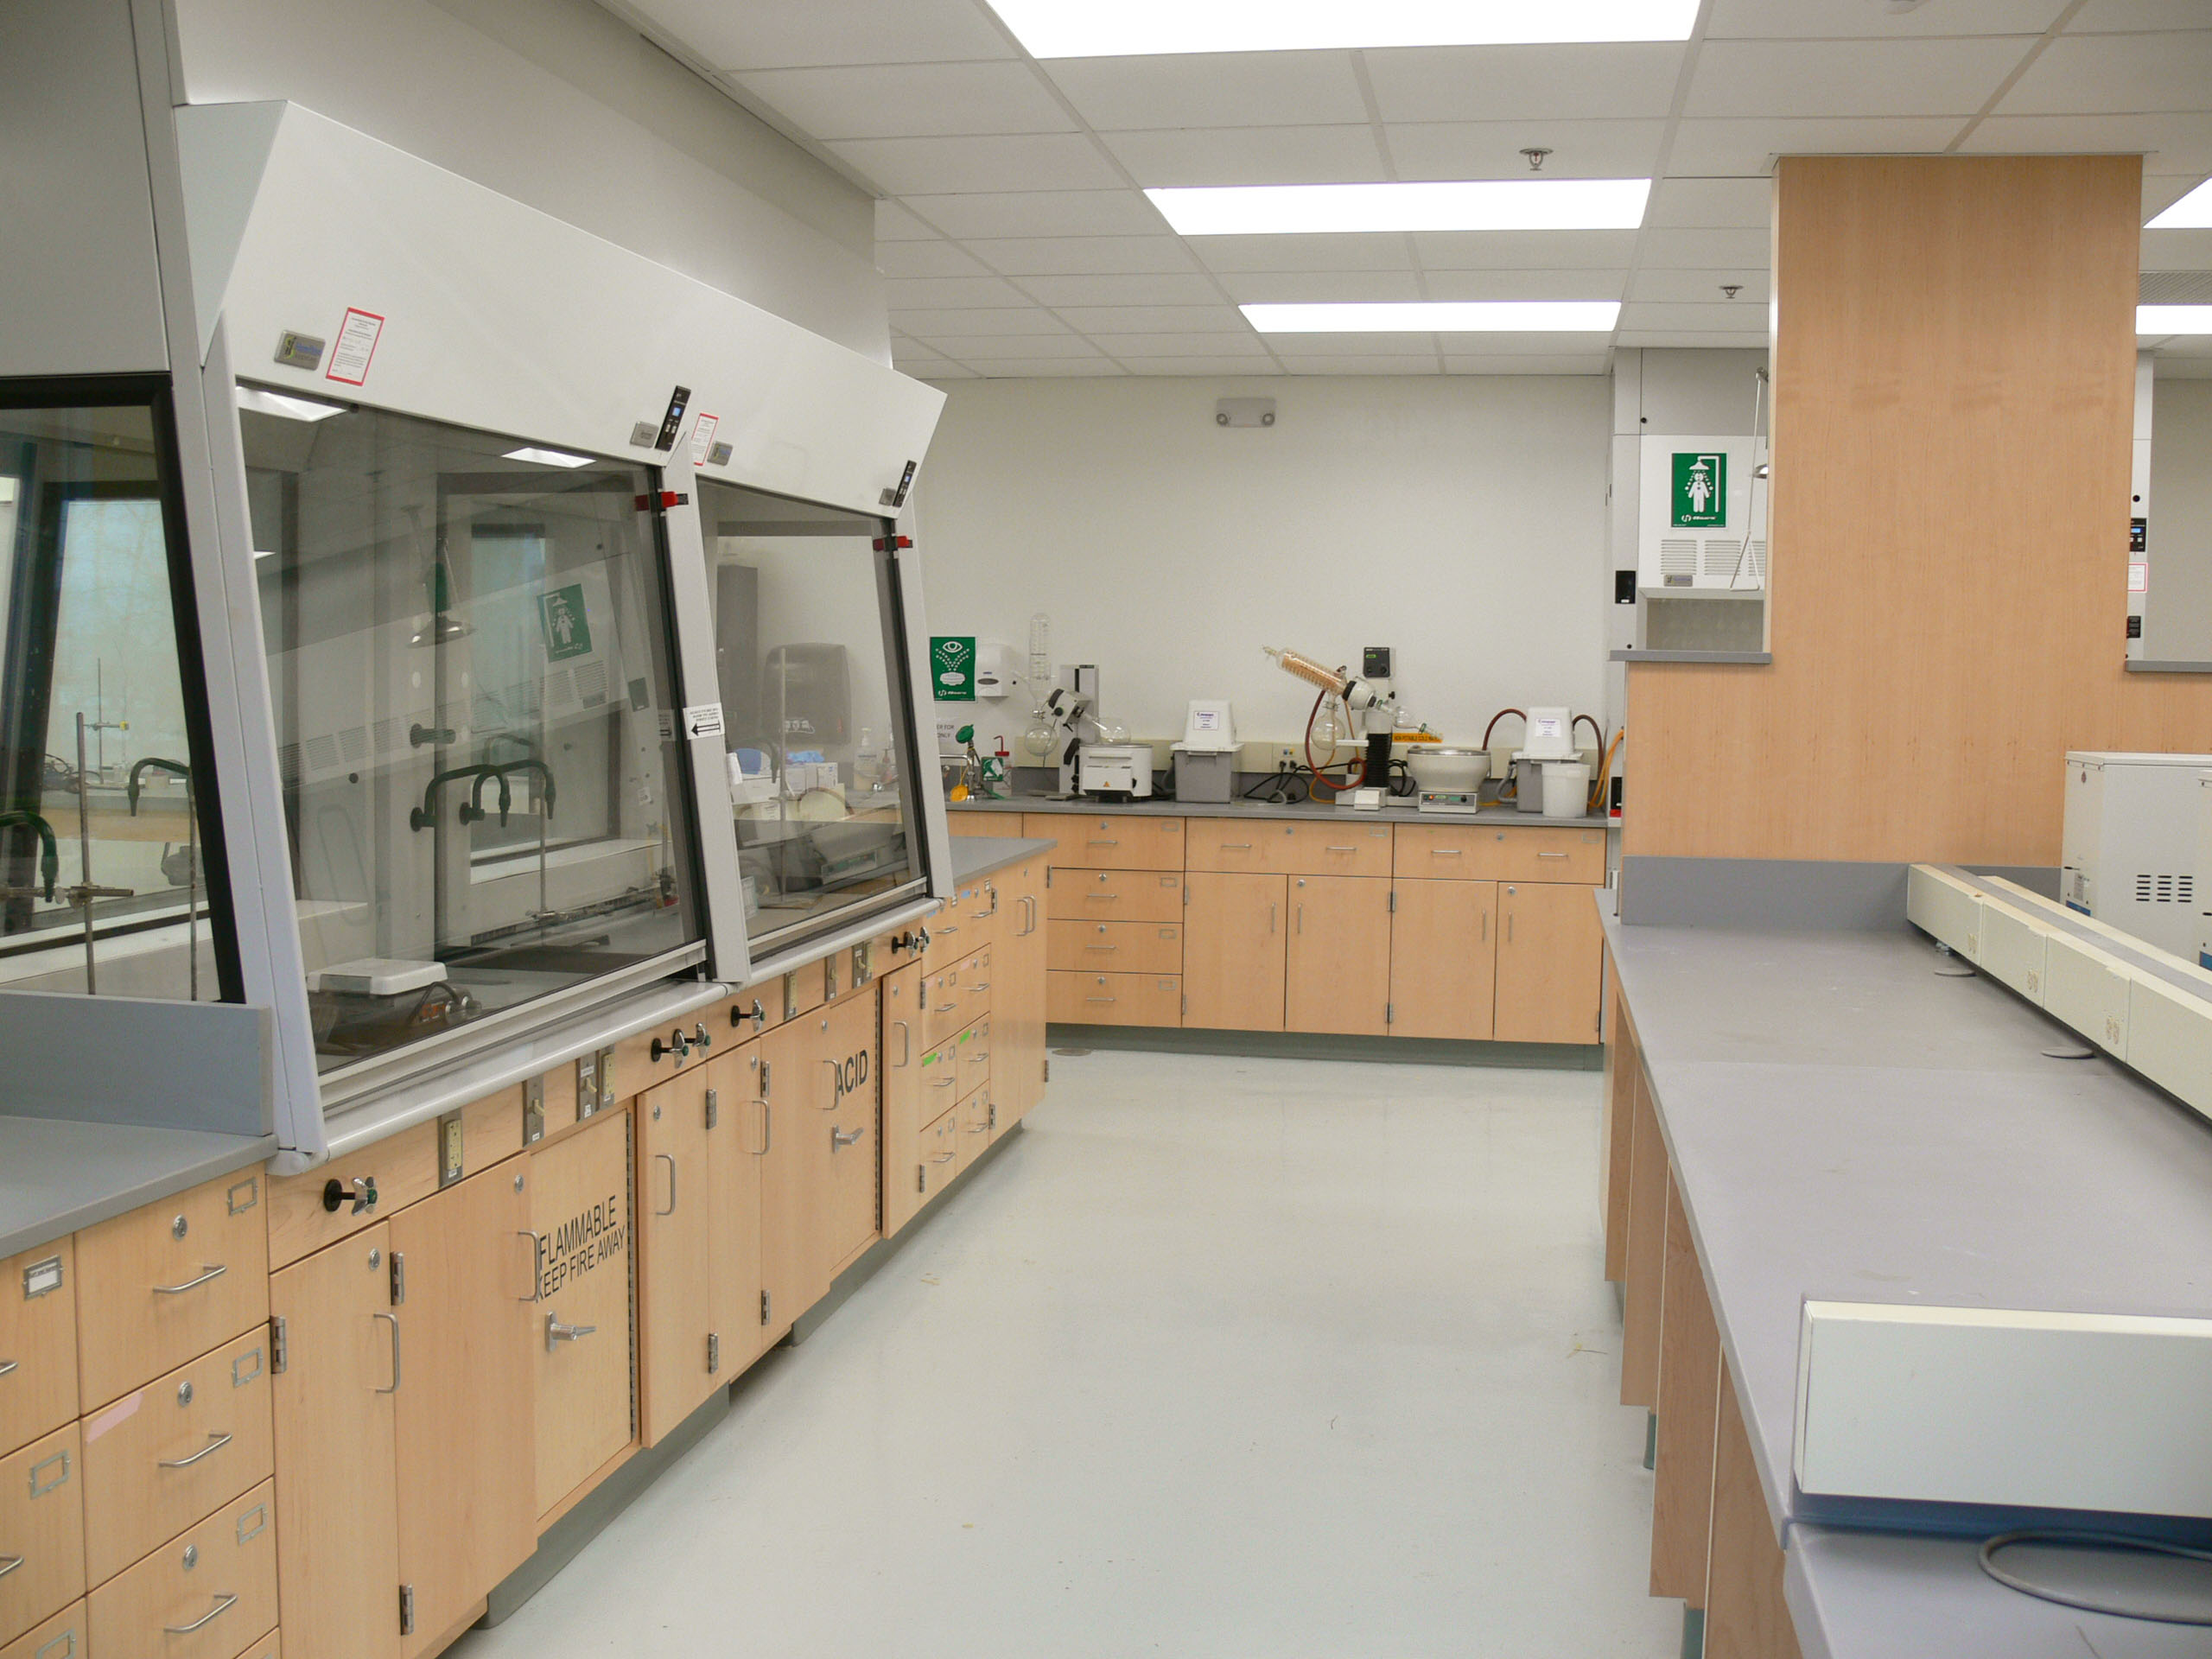 Interior, Olney Teaching Laboratory at UMass Lowell, fume hoods, work stations, equipment